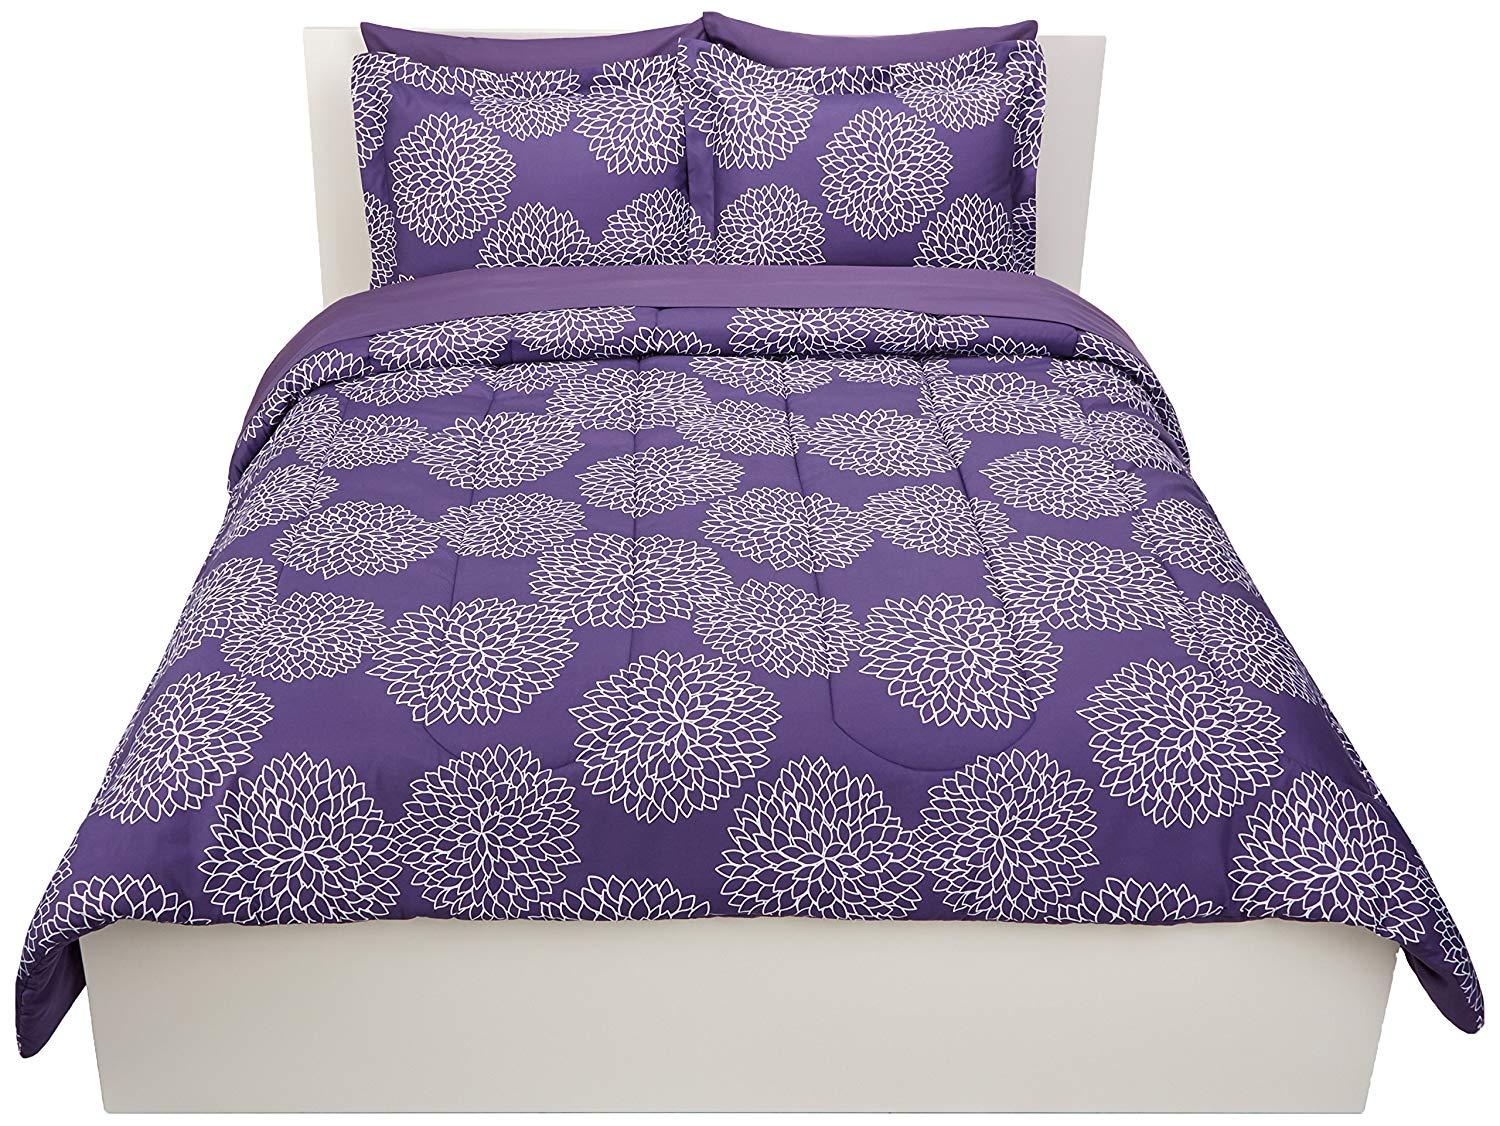 Floral 7 Pc Comforter Set Bed In A Bag Full/Queen Bedroom Dorm Gift - $79.57